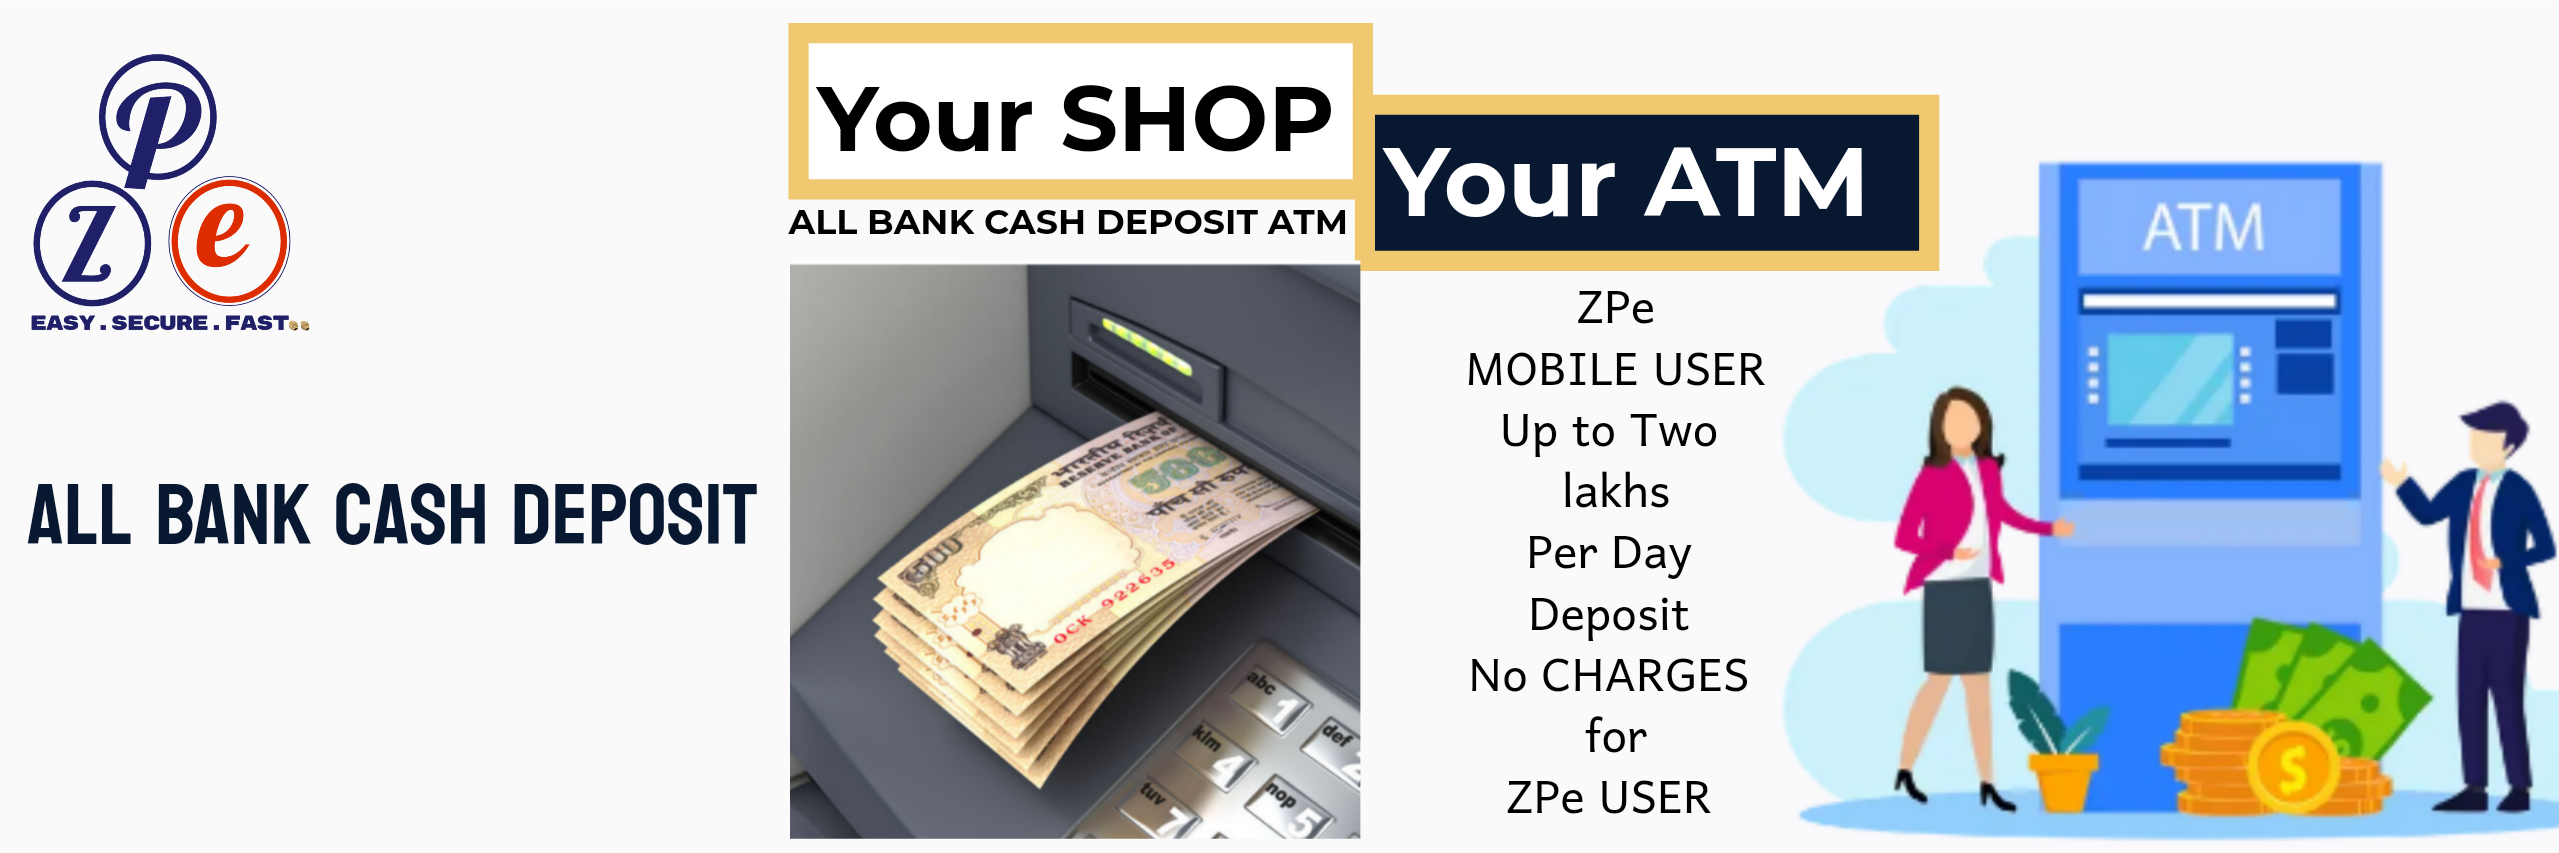 Cash Deposit